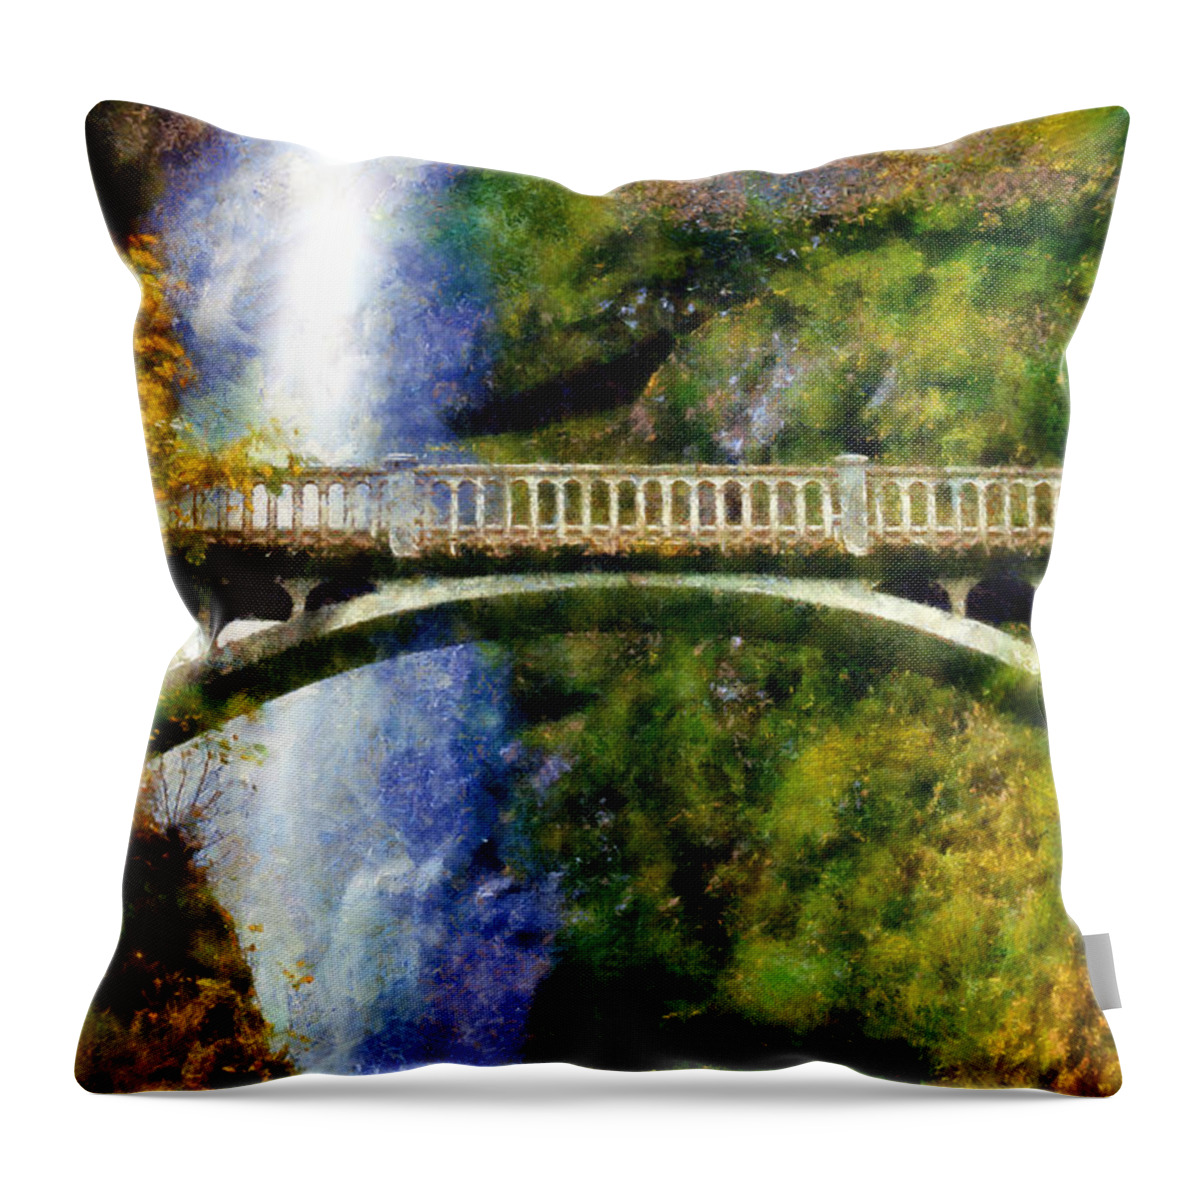 Multnomah Falls Bridge Throw Pillow featuring the digital art Multnomah Falls Bridge by Kaylee Mason